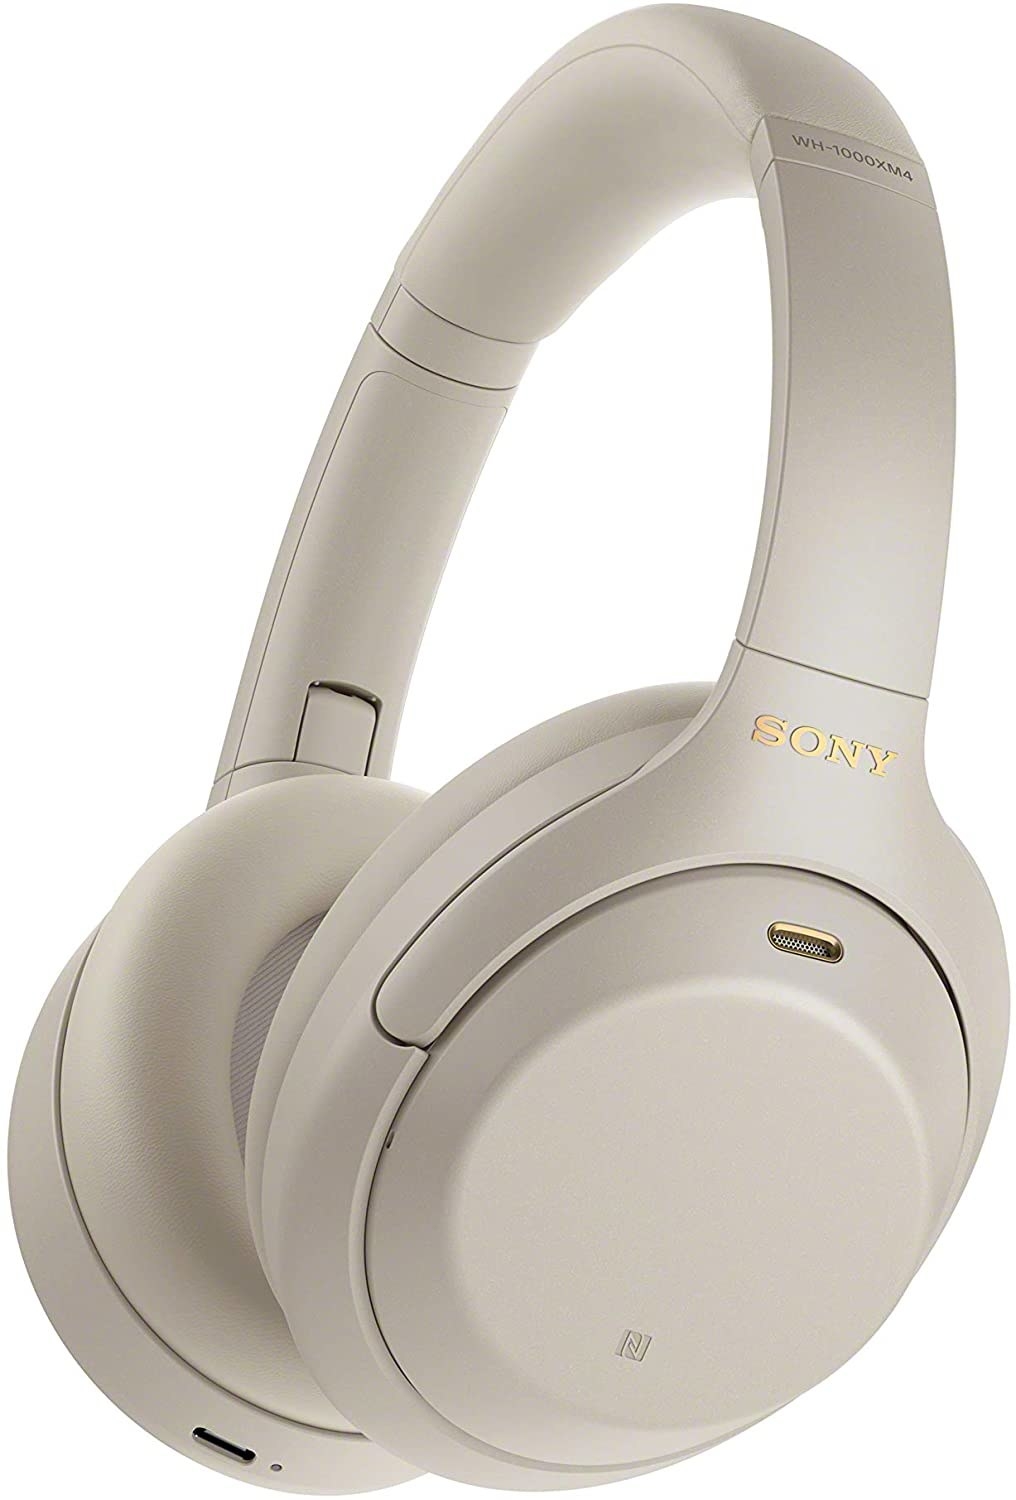 The Sony wireless headphones in silver